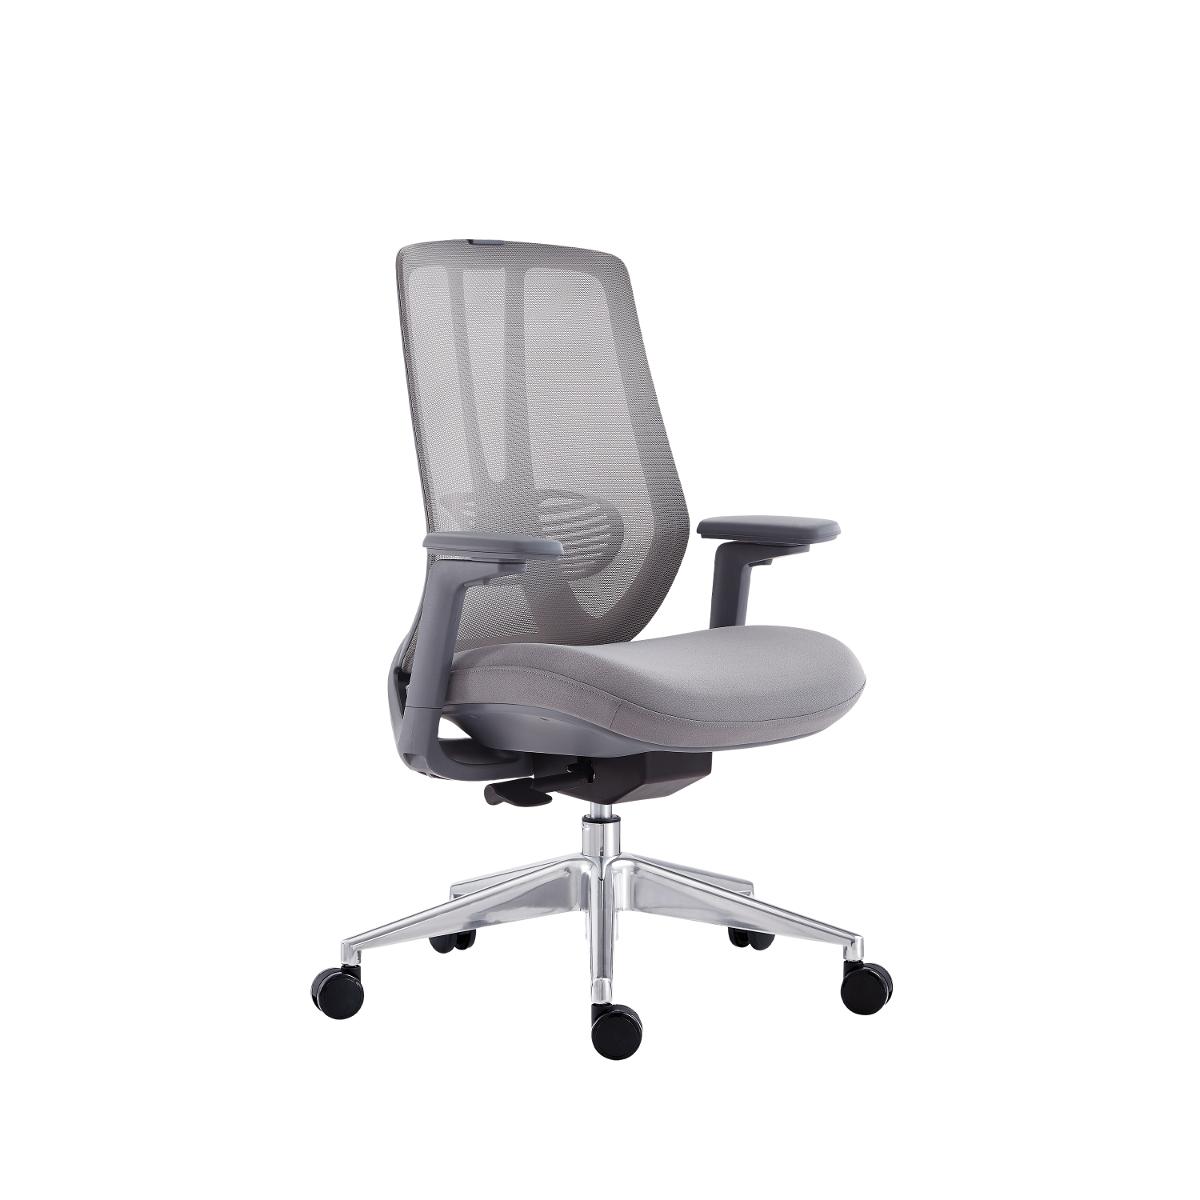 Super Chair เก้าอี้สำนักงาน รุ่น 7102-7 M Grey